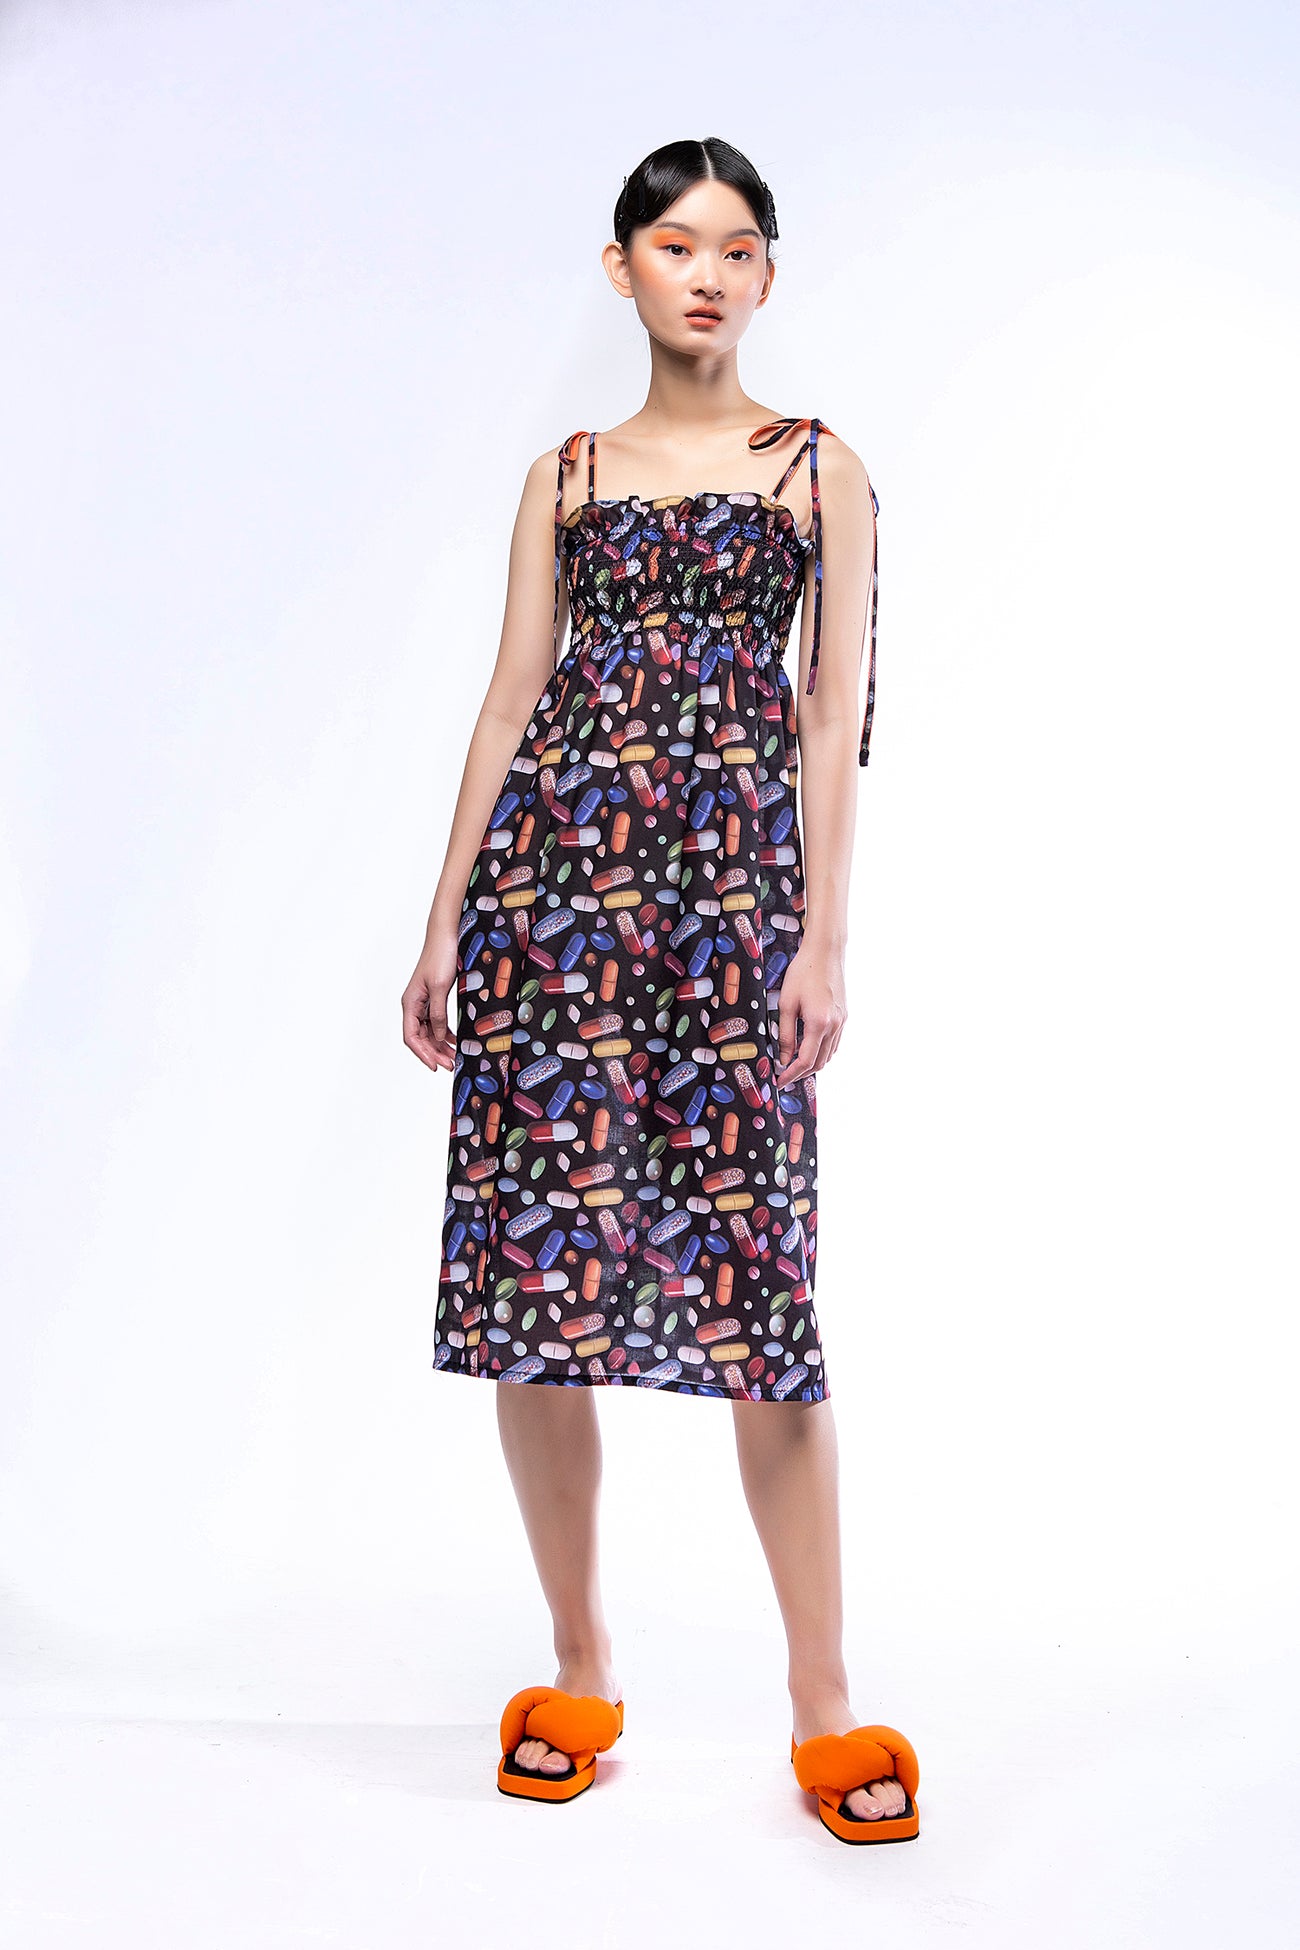 VAANI Multistyle Dress/Skirt in Pills Print